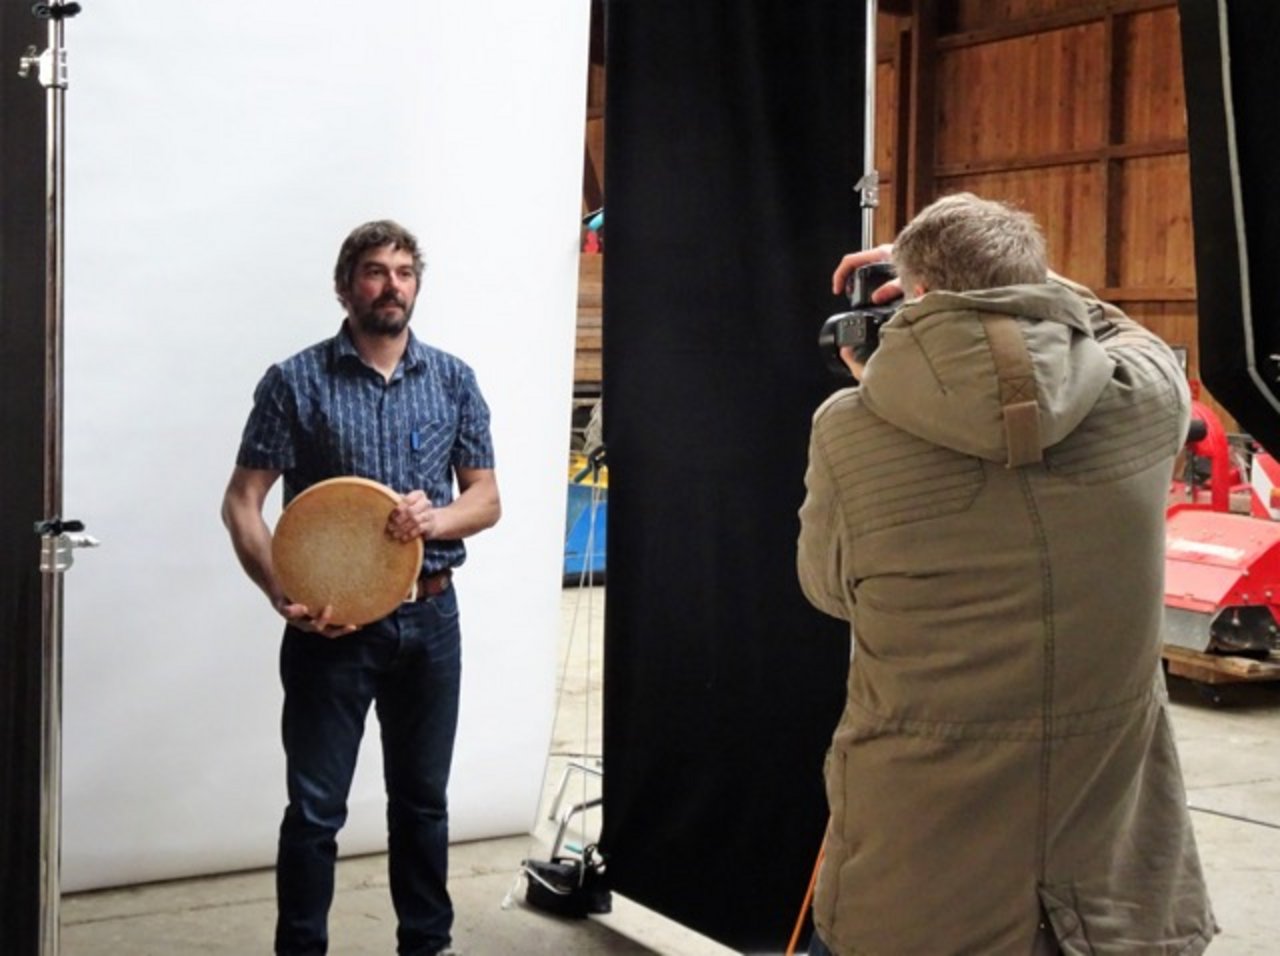 Making-Of: Christian Beglinger steht beim Fotoshooting vor der Kamera des Fotografen. 